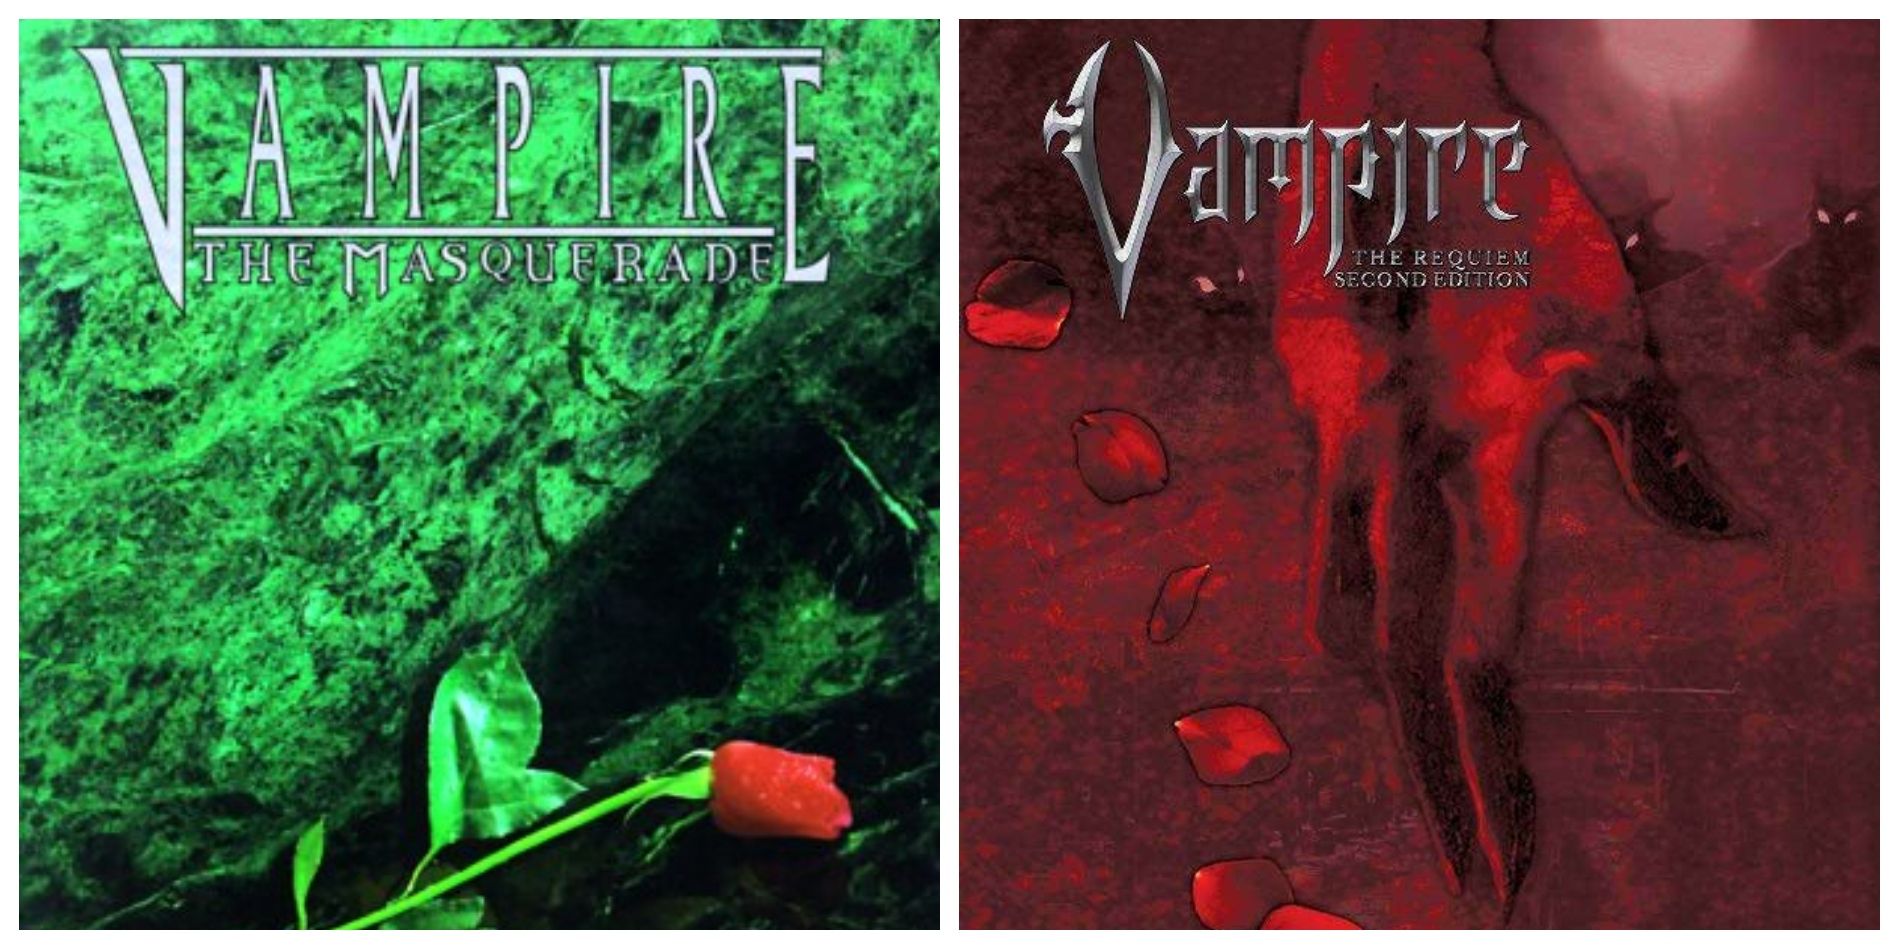 Why Both Vampire The Masquerade &amp; Vampire The Requiem Exist - Vampire The Masquerade and The Requiem Covers